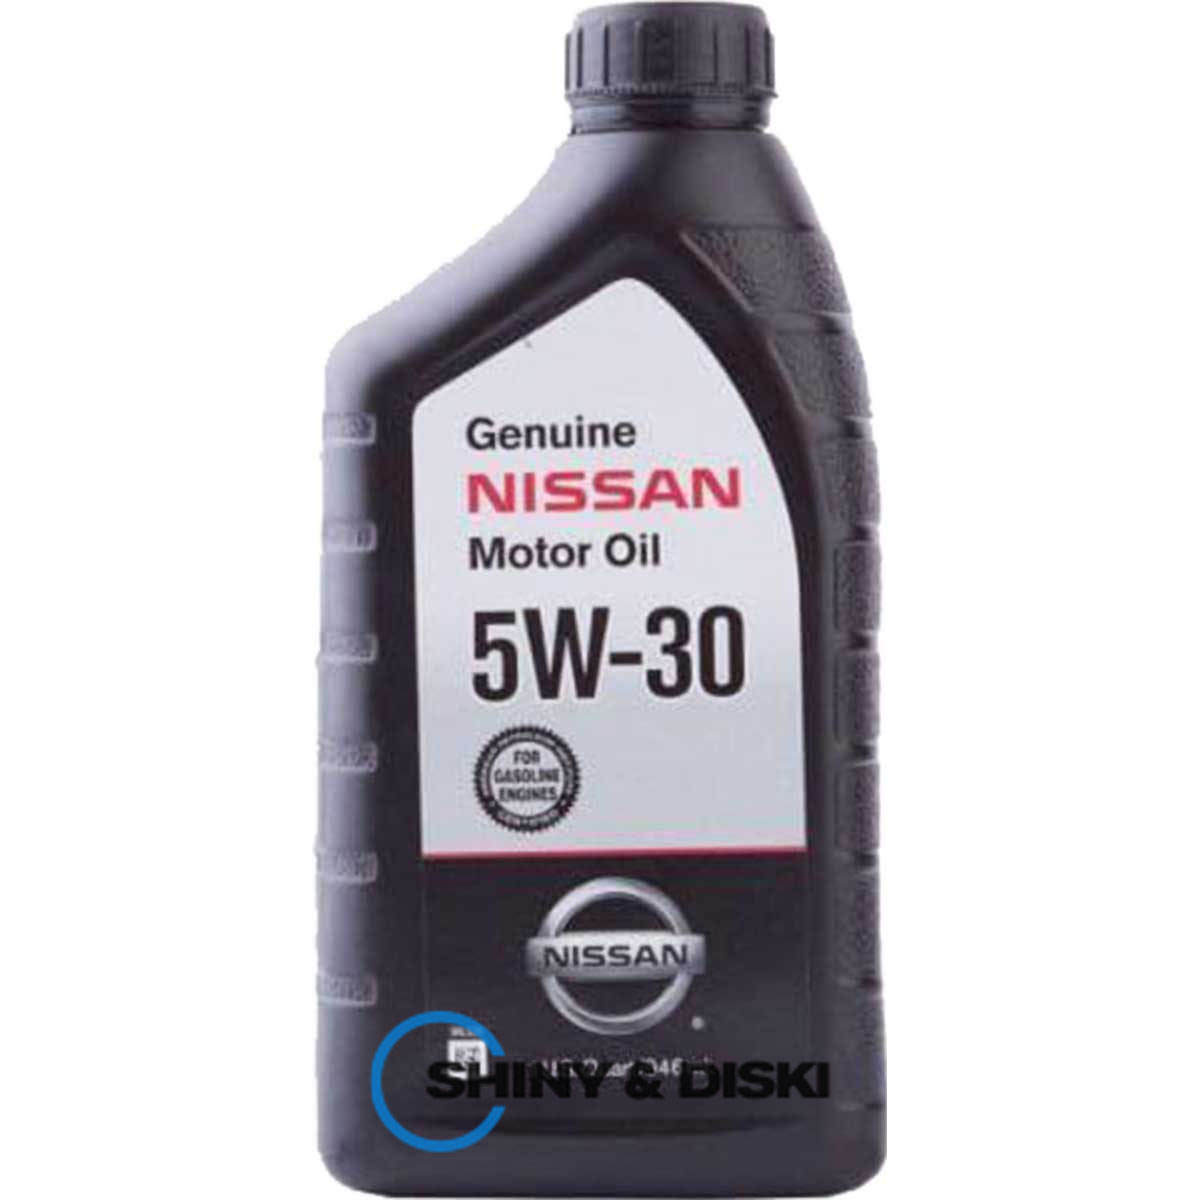 nissan genuine motor oil 5w-30 (0.946 л)